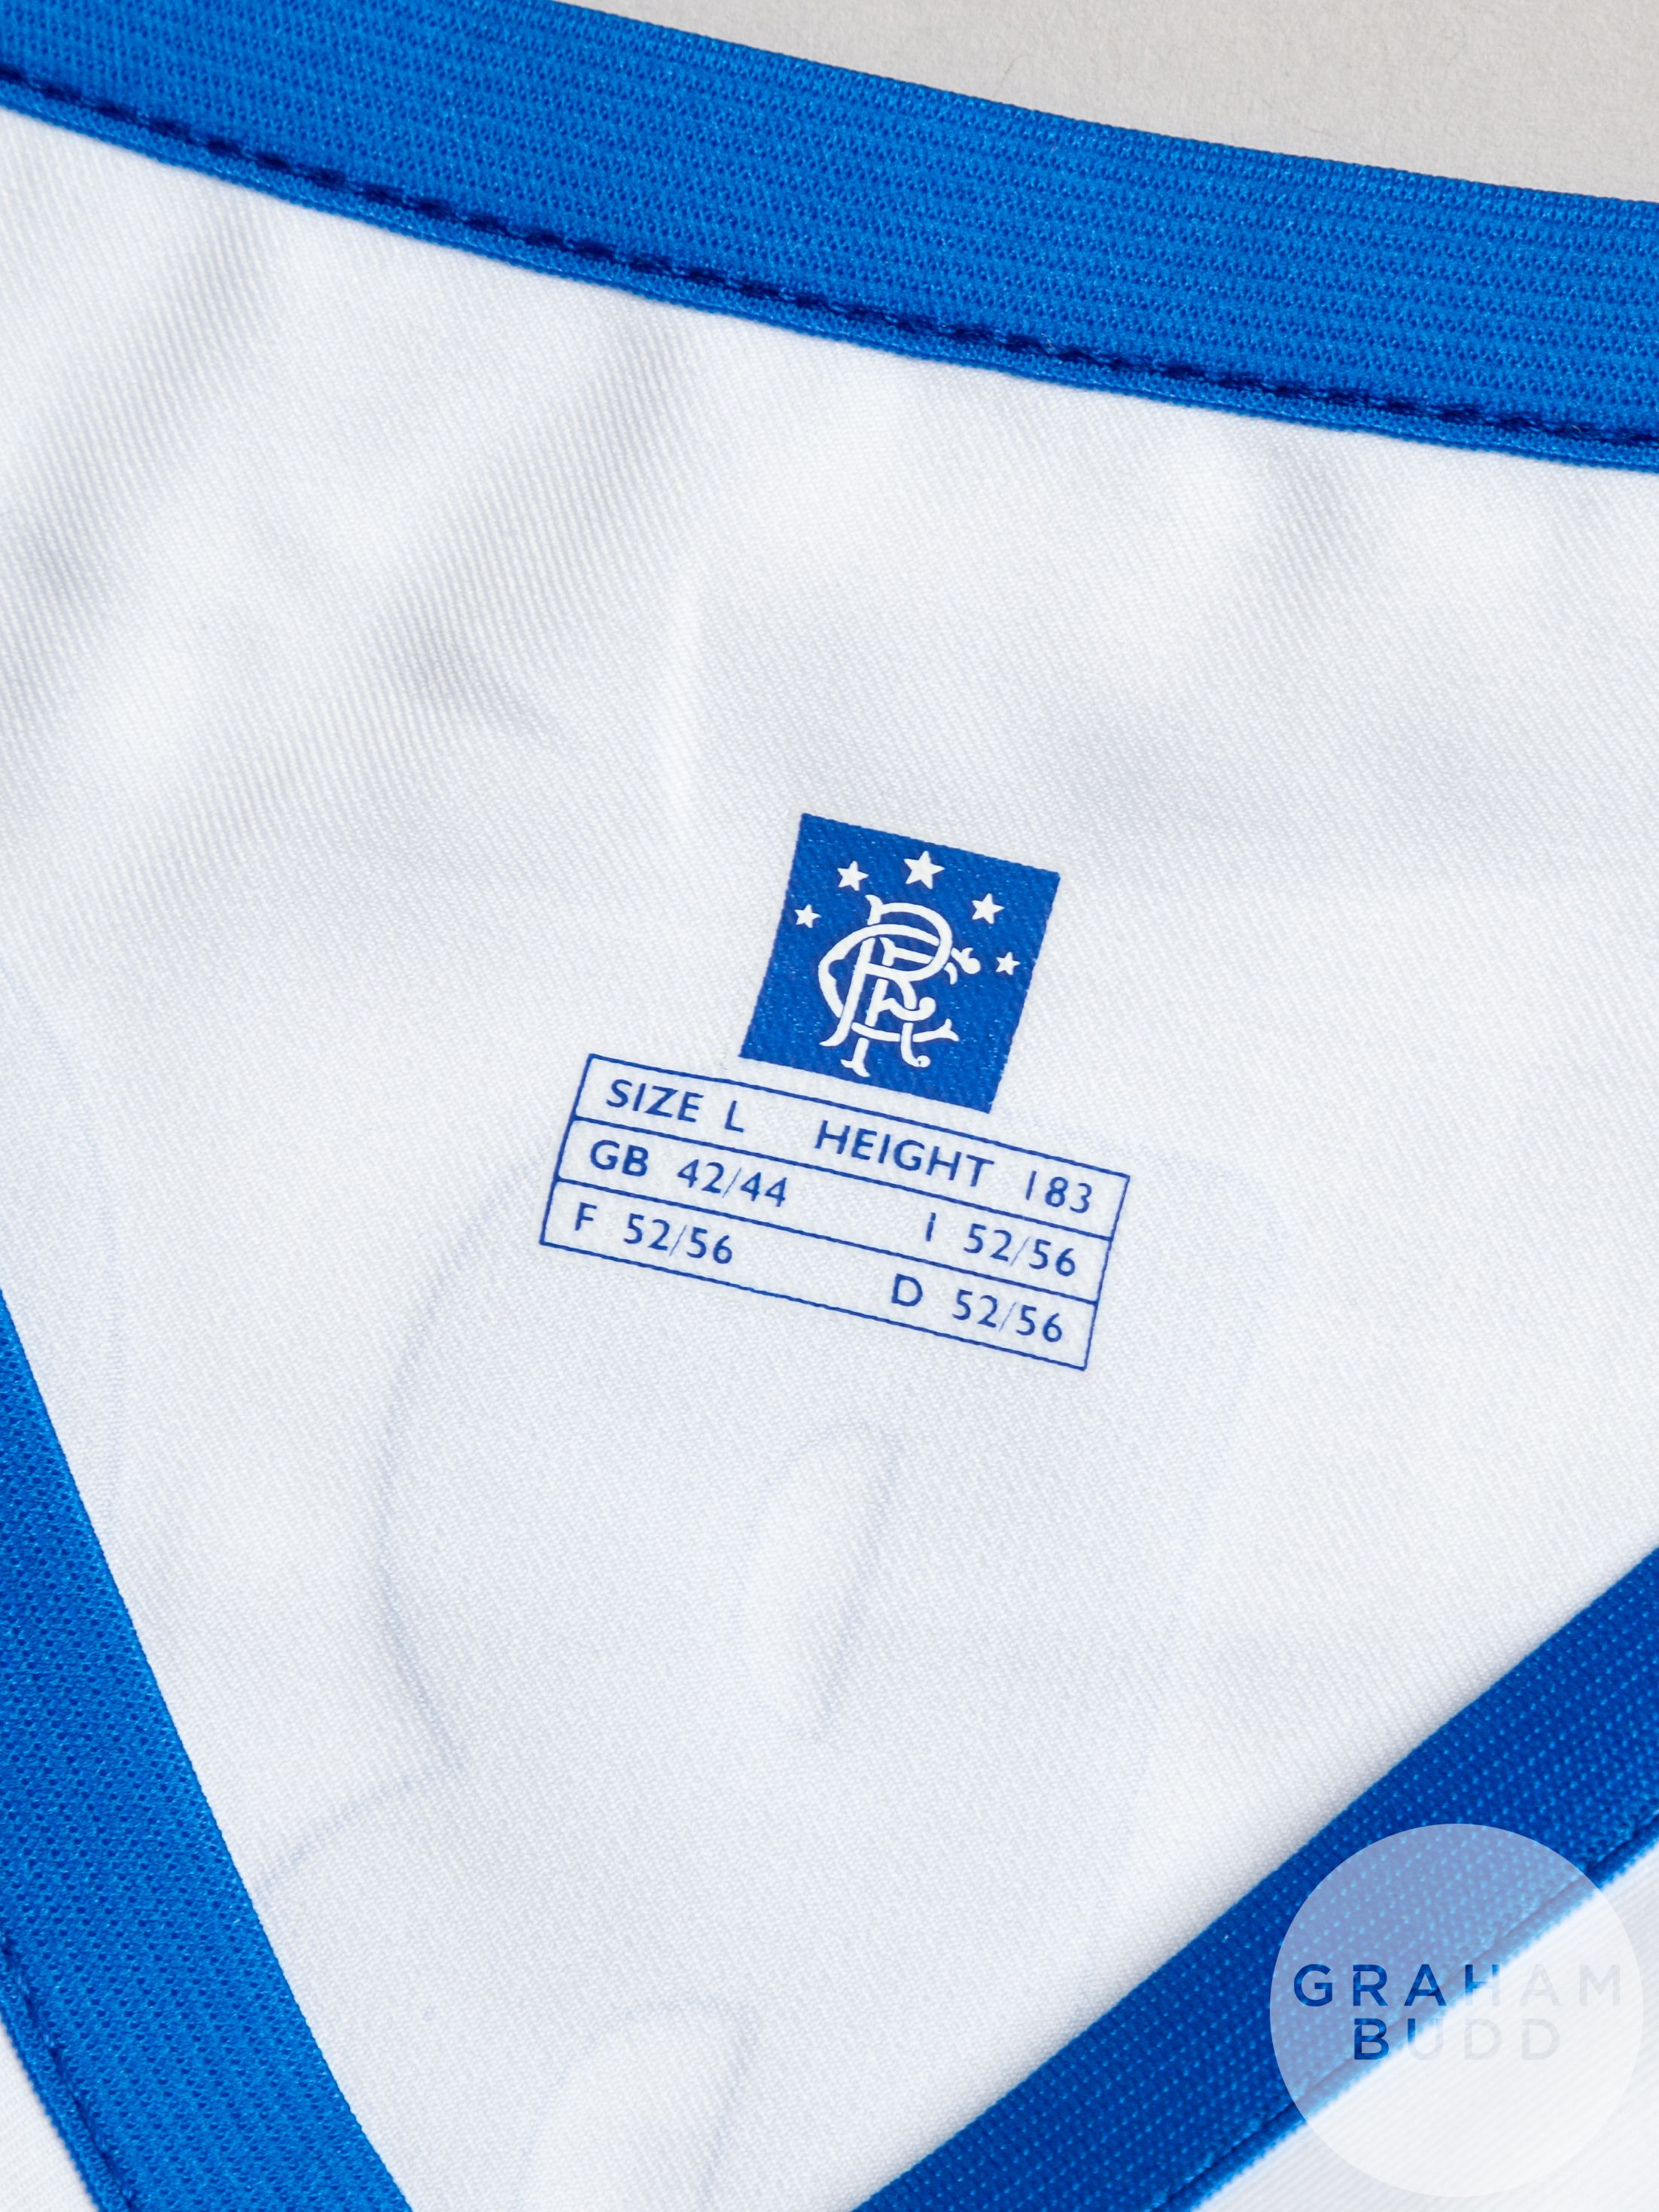 Frank De Boer white, blue and red No.5 Rangers short-sleeved shirt - Image 5 of 7